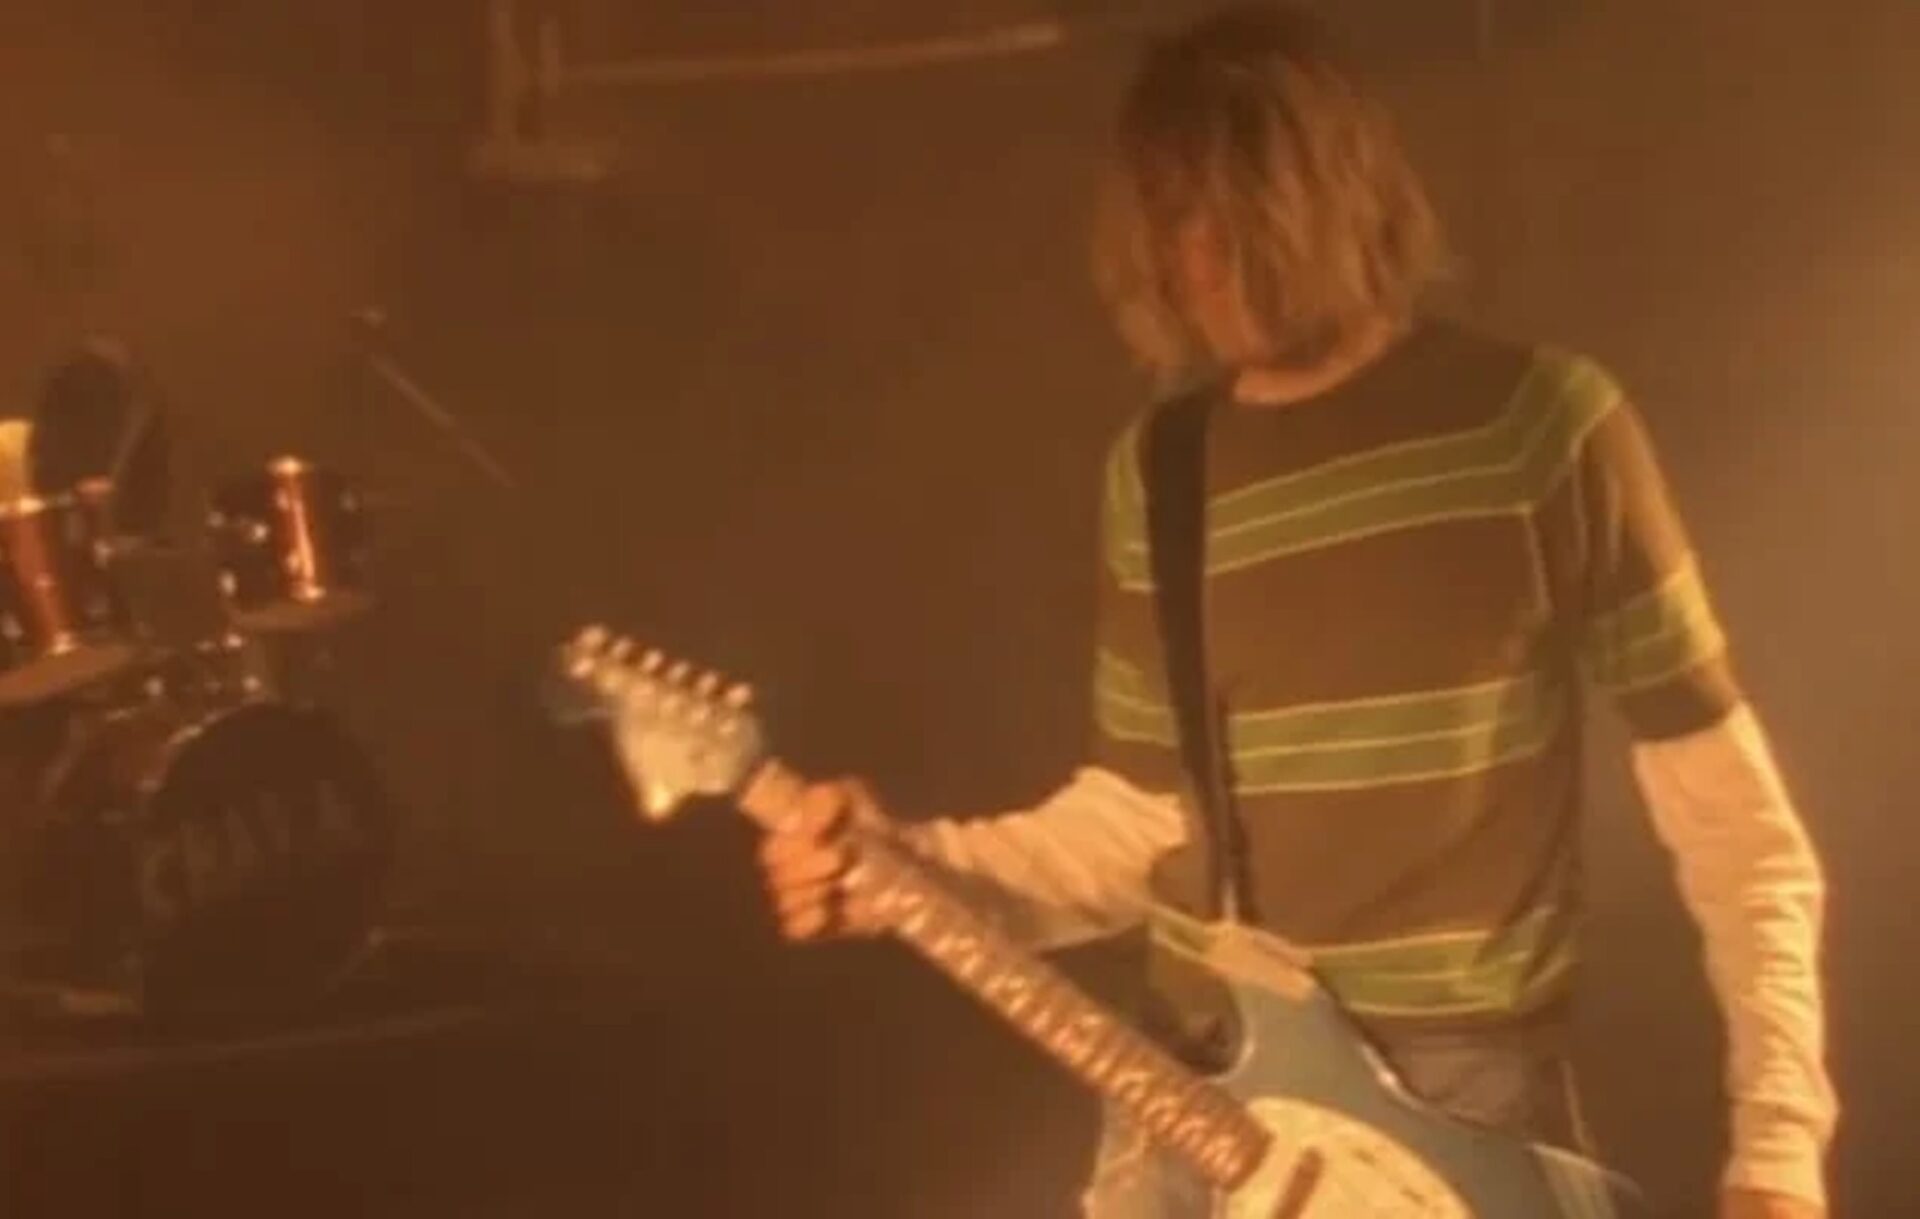 Kurt Cobain's blue hair in the "Smells Like Teen Spirit" music video - wide 1